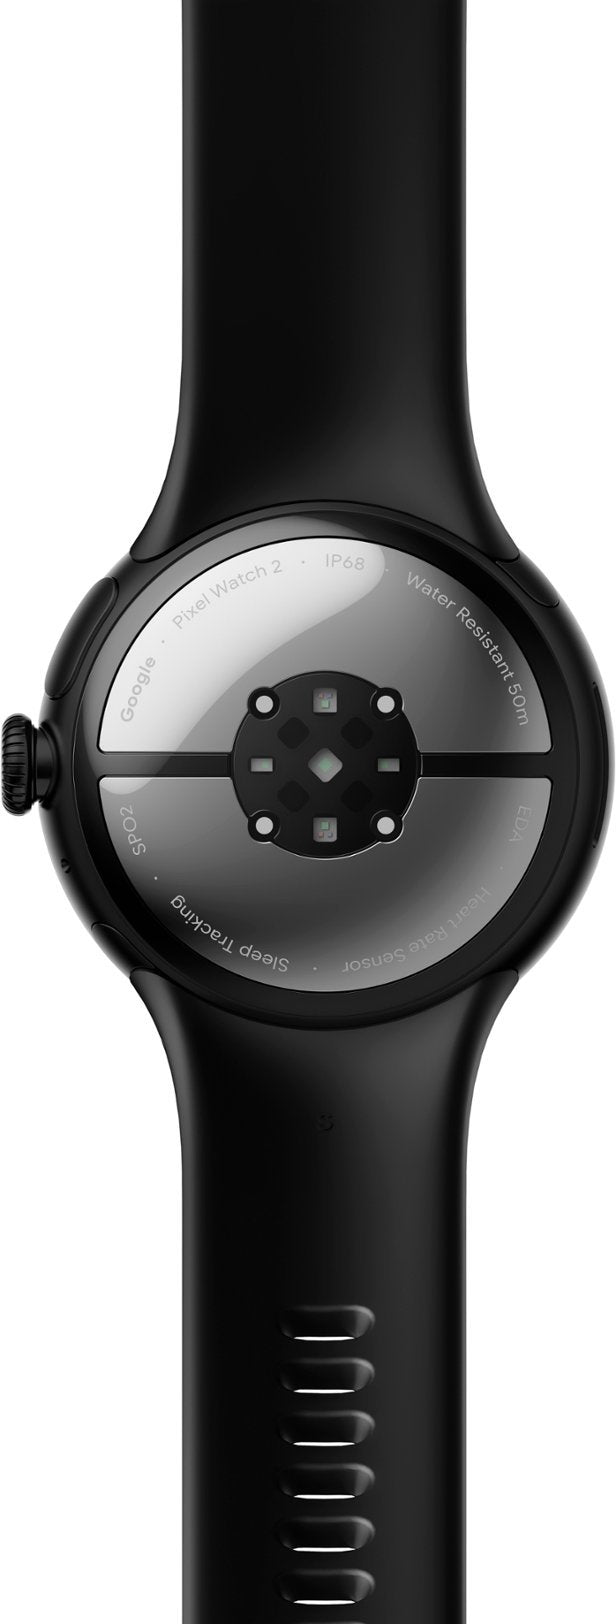 Google Pixel Watch 2 Aluminum Case Wi-Fi Smartwatch - 41mm